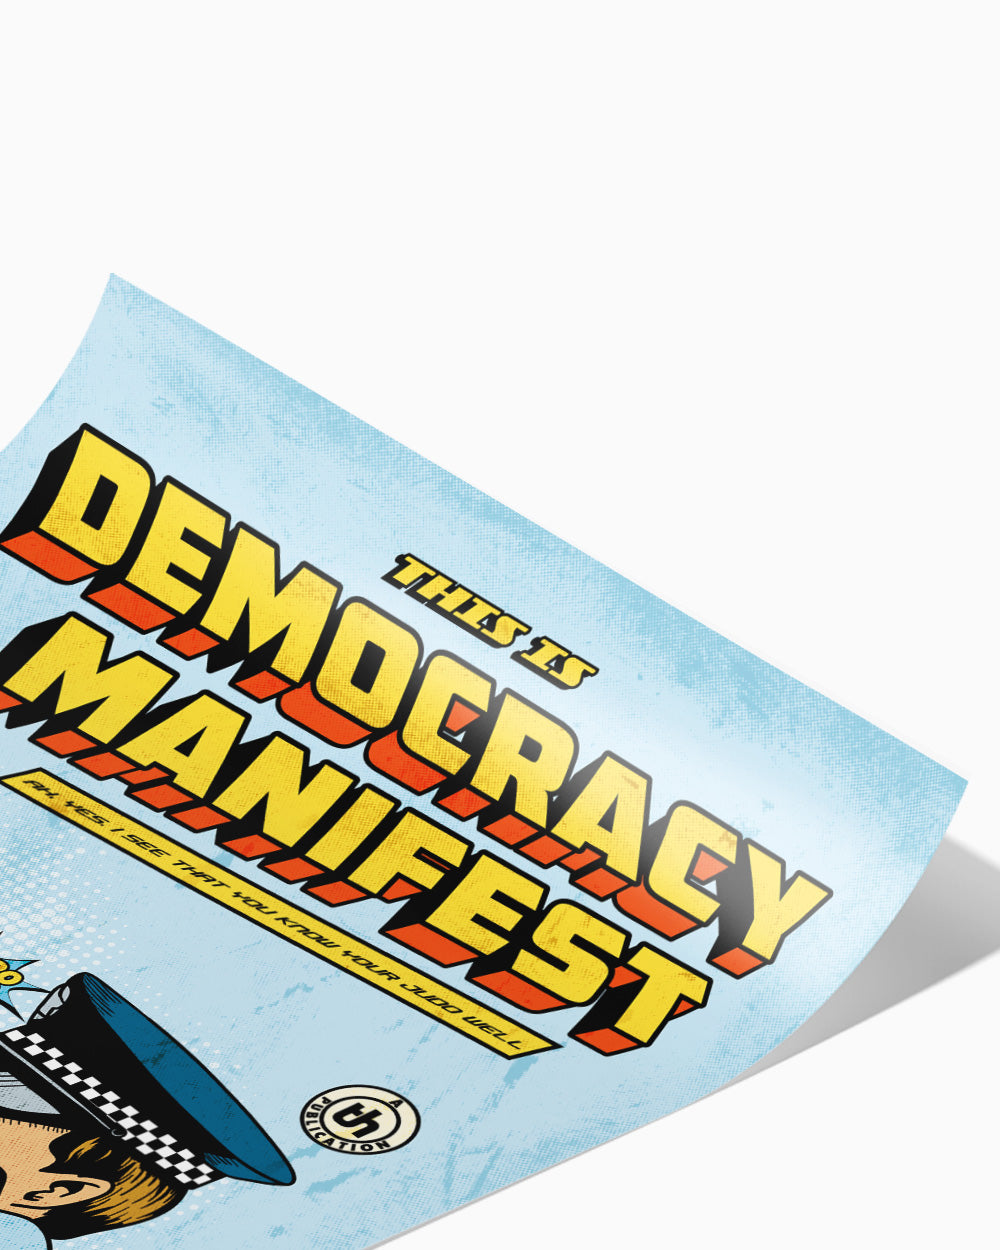 This is Democracy Manifest Tote Bag Australia Online